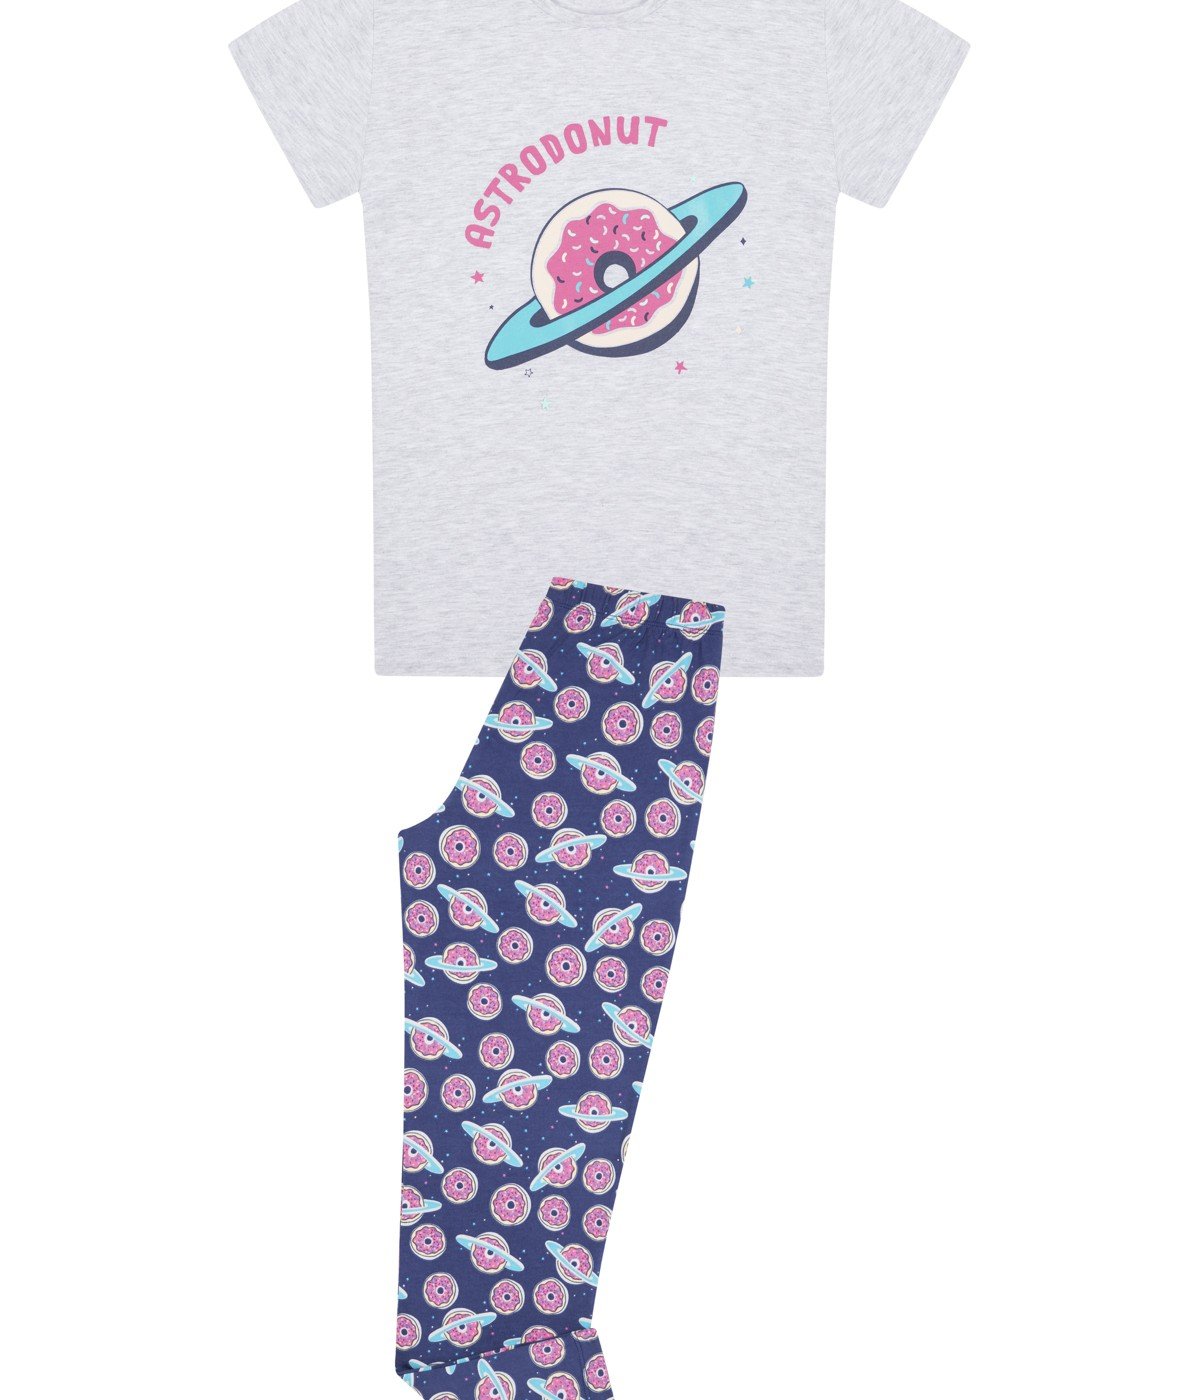 Set Pijama Teen Astrodonut 2 Buc.